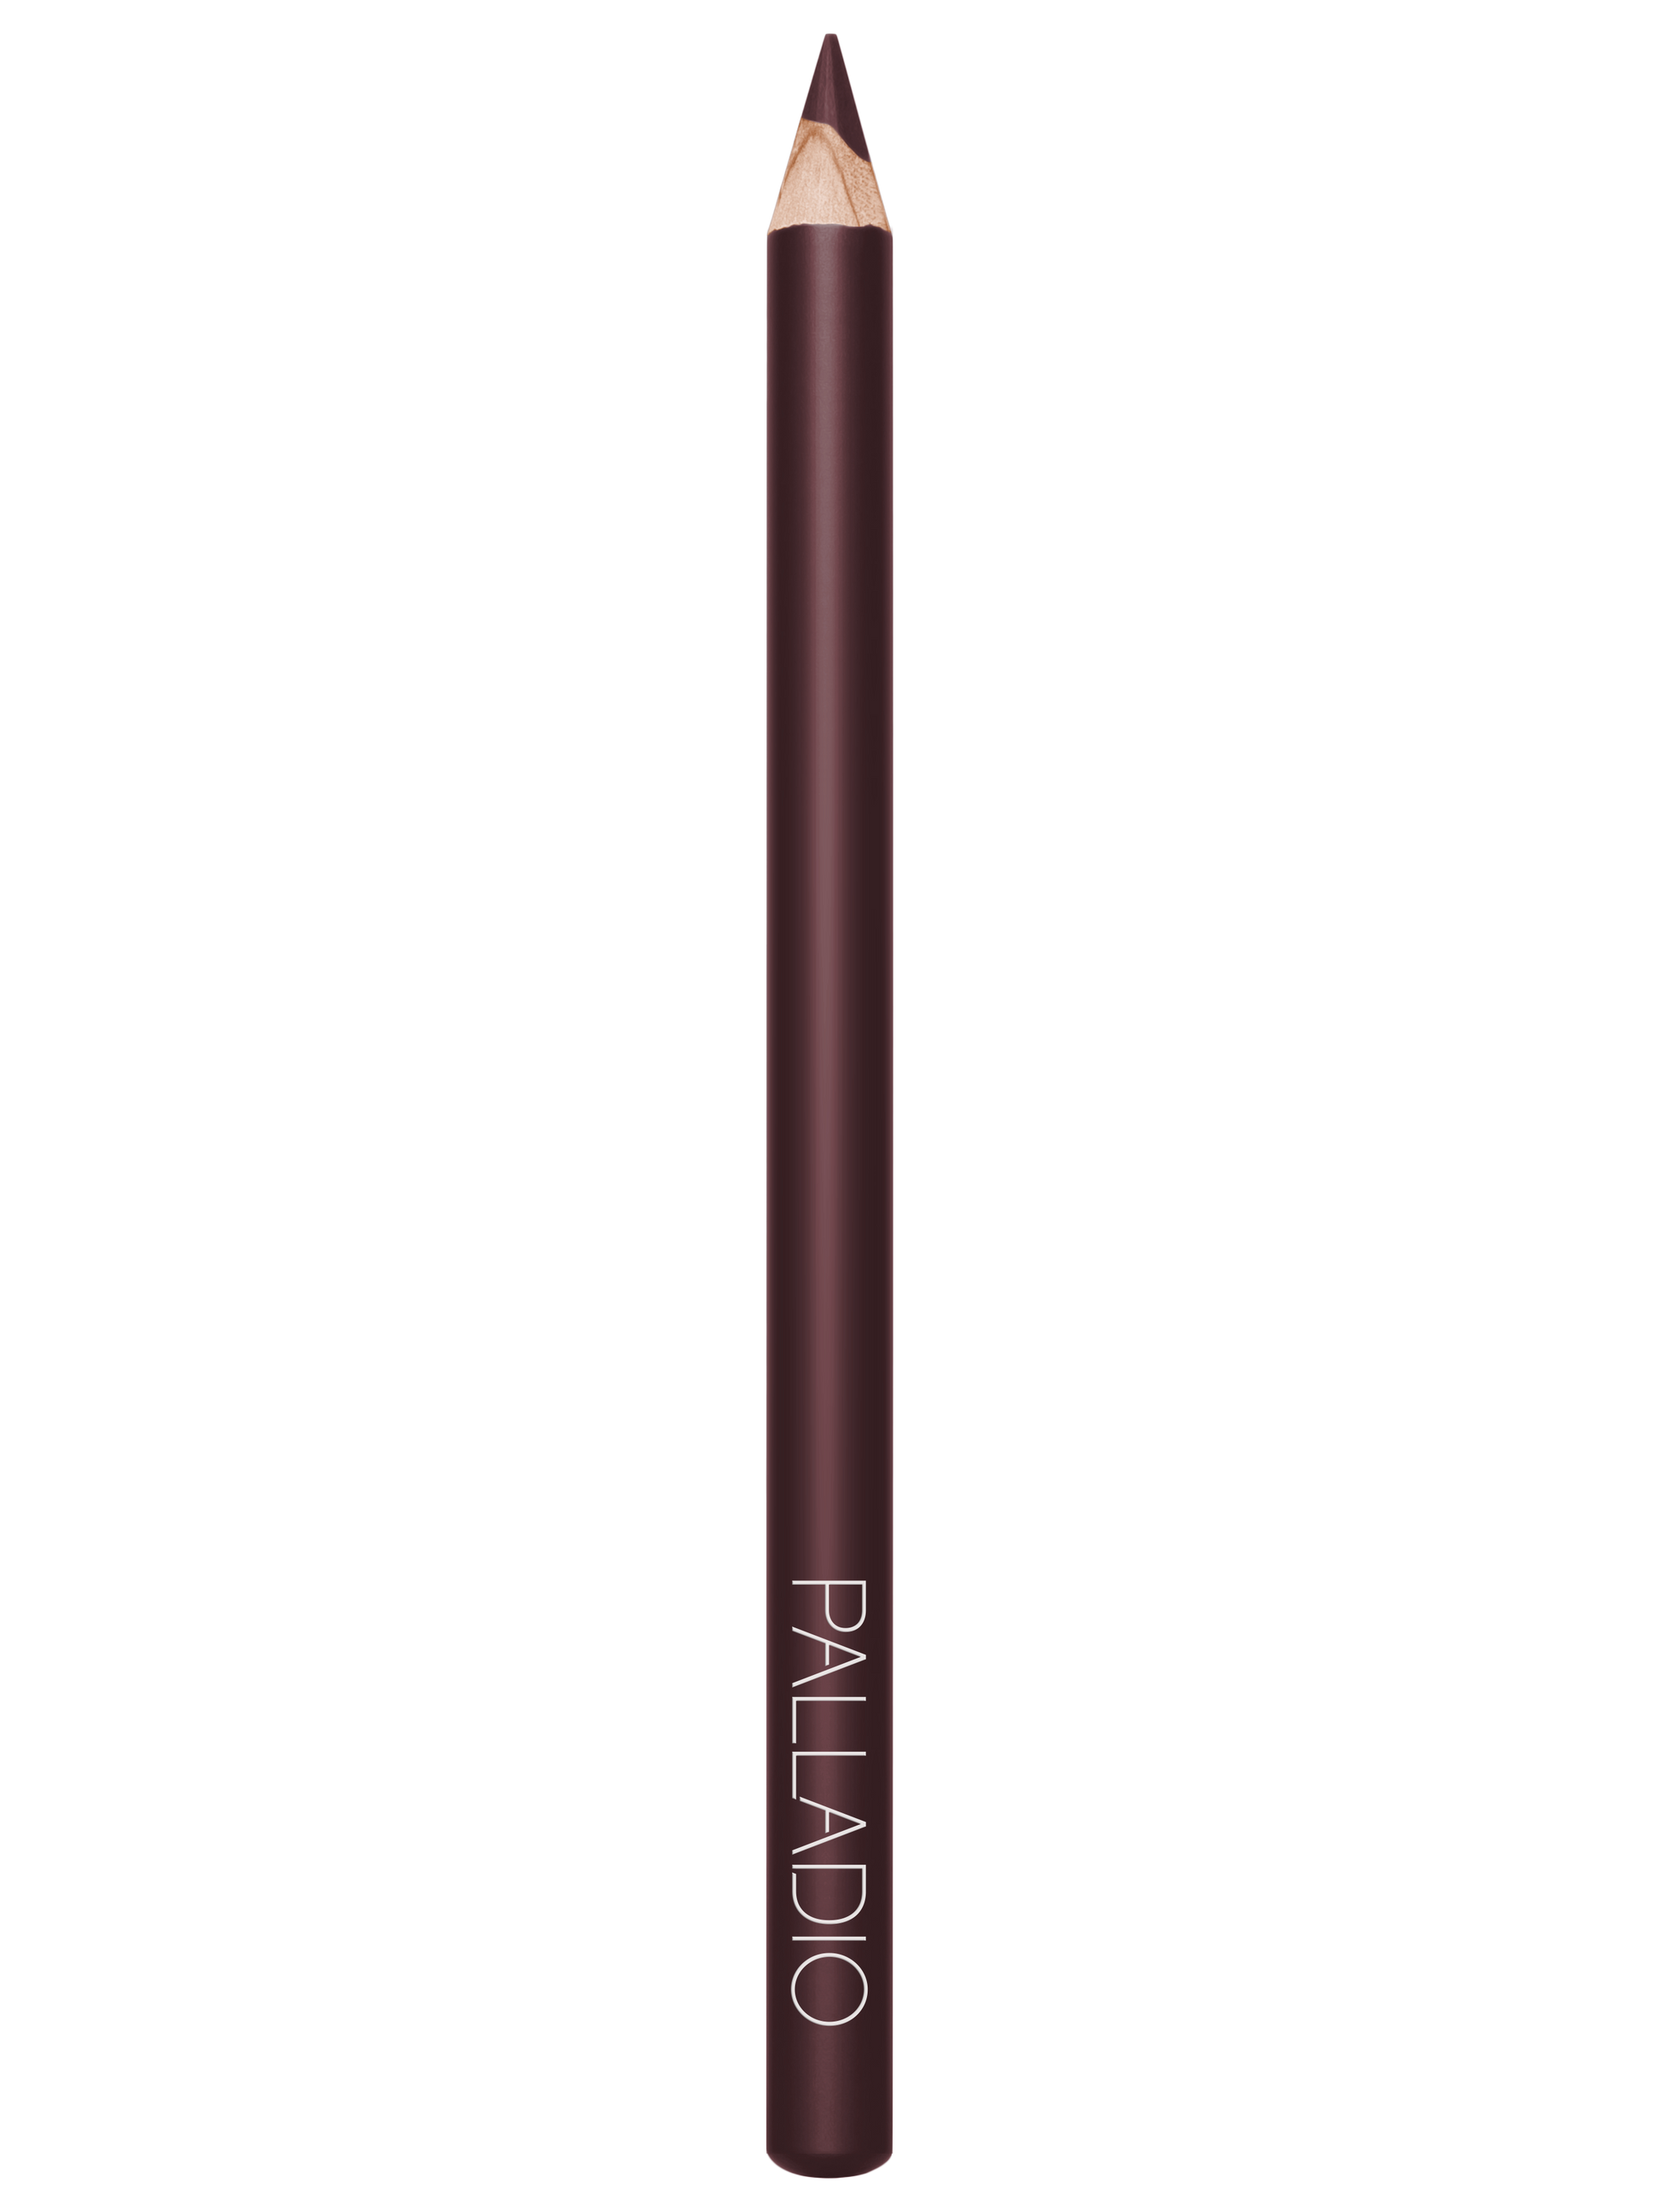 Palladio Lipstick Liner PencilLip LinerPALLADIOColor: Chianti Ll280